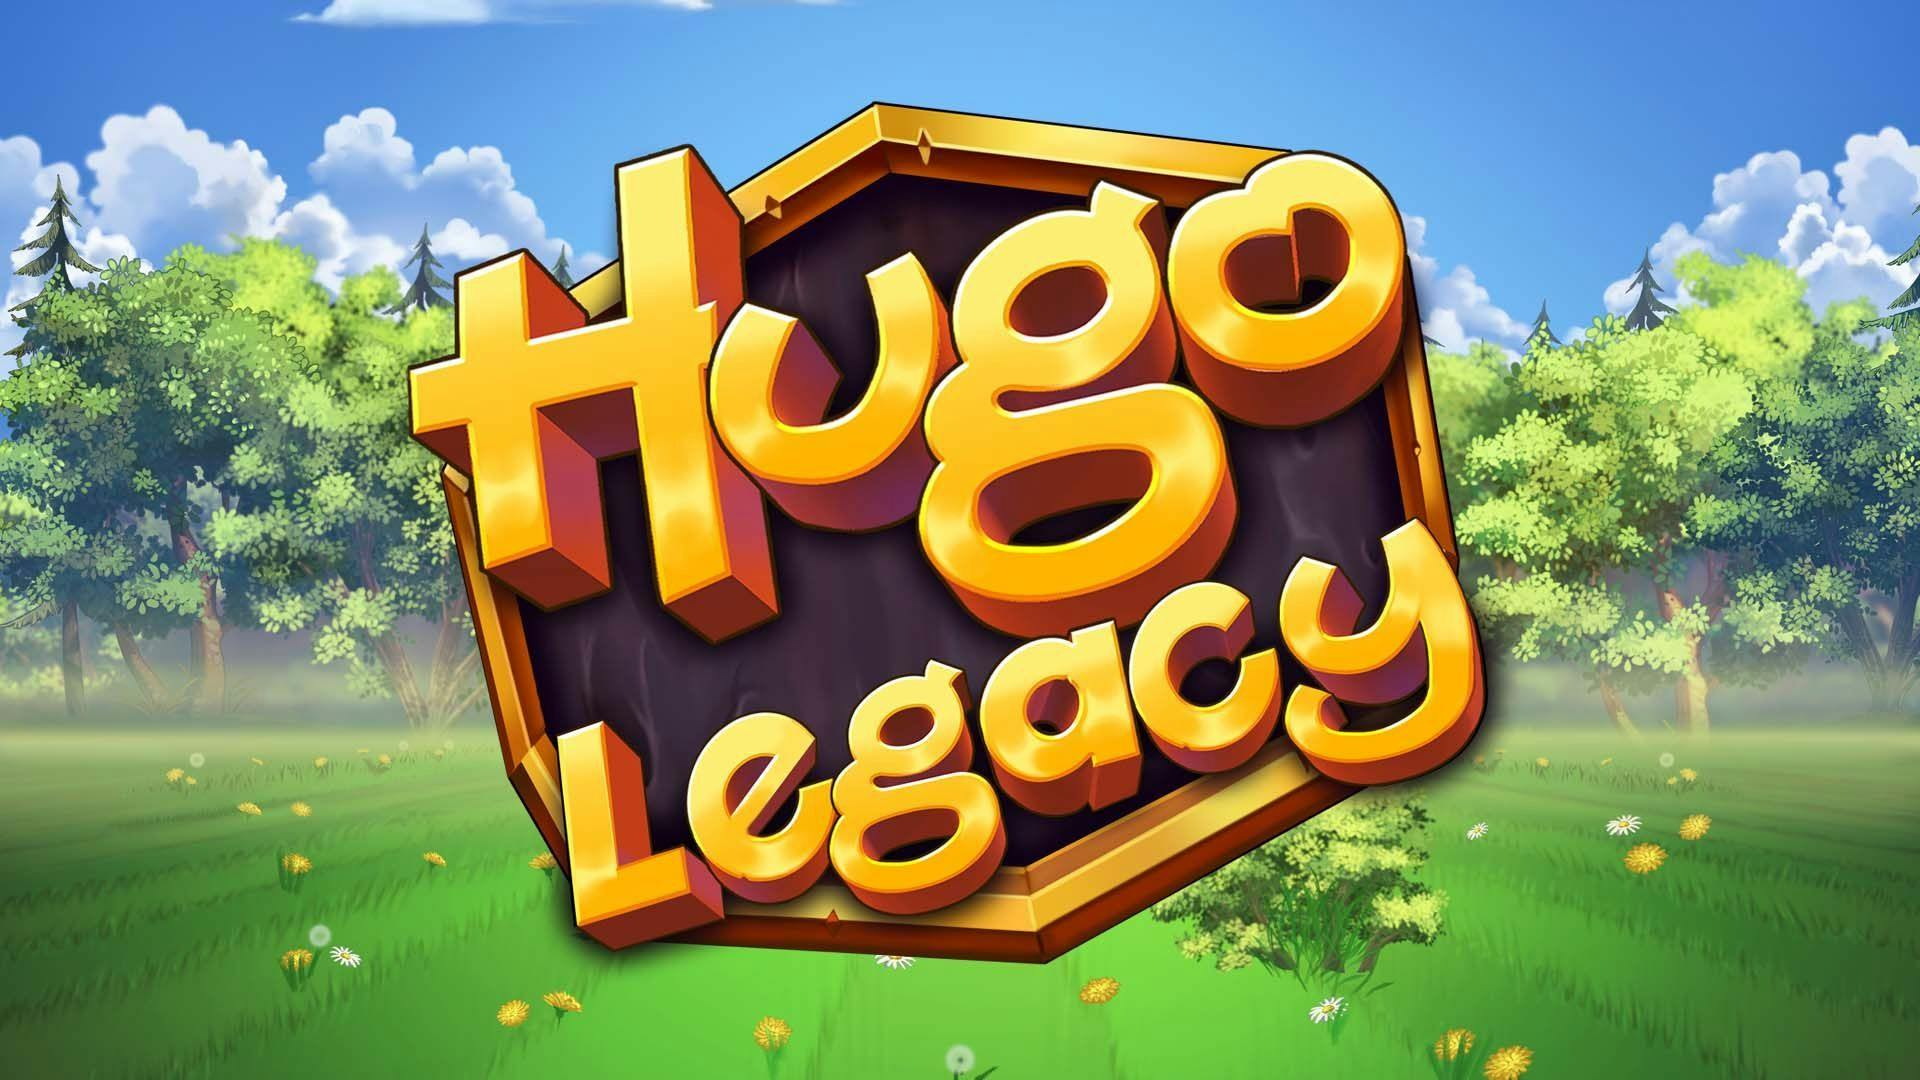 Hugo Legacy Slot Machine Online Free Game Play